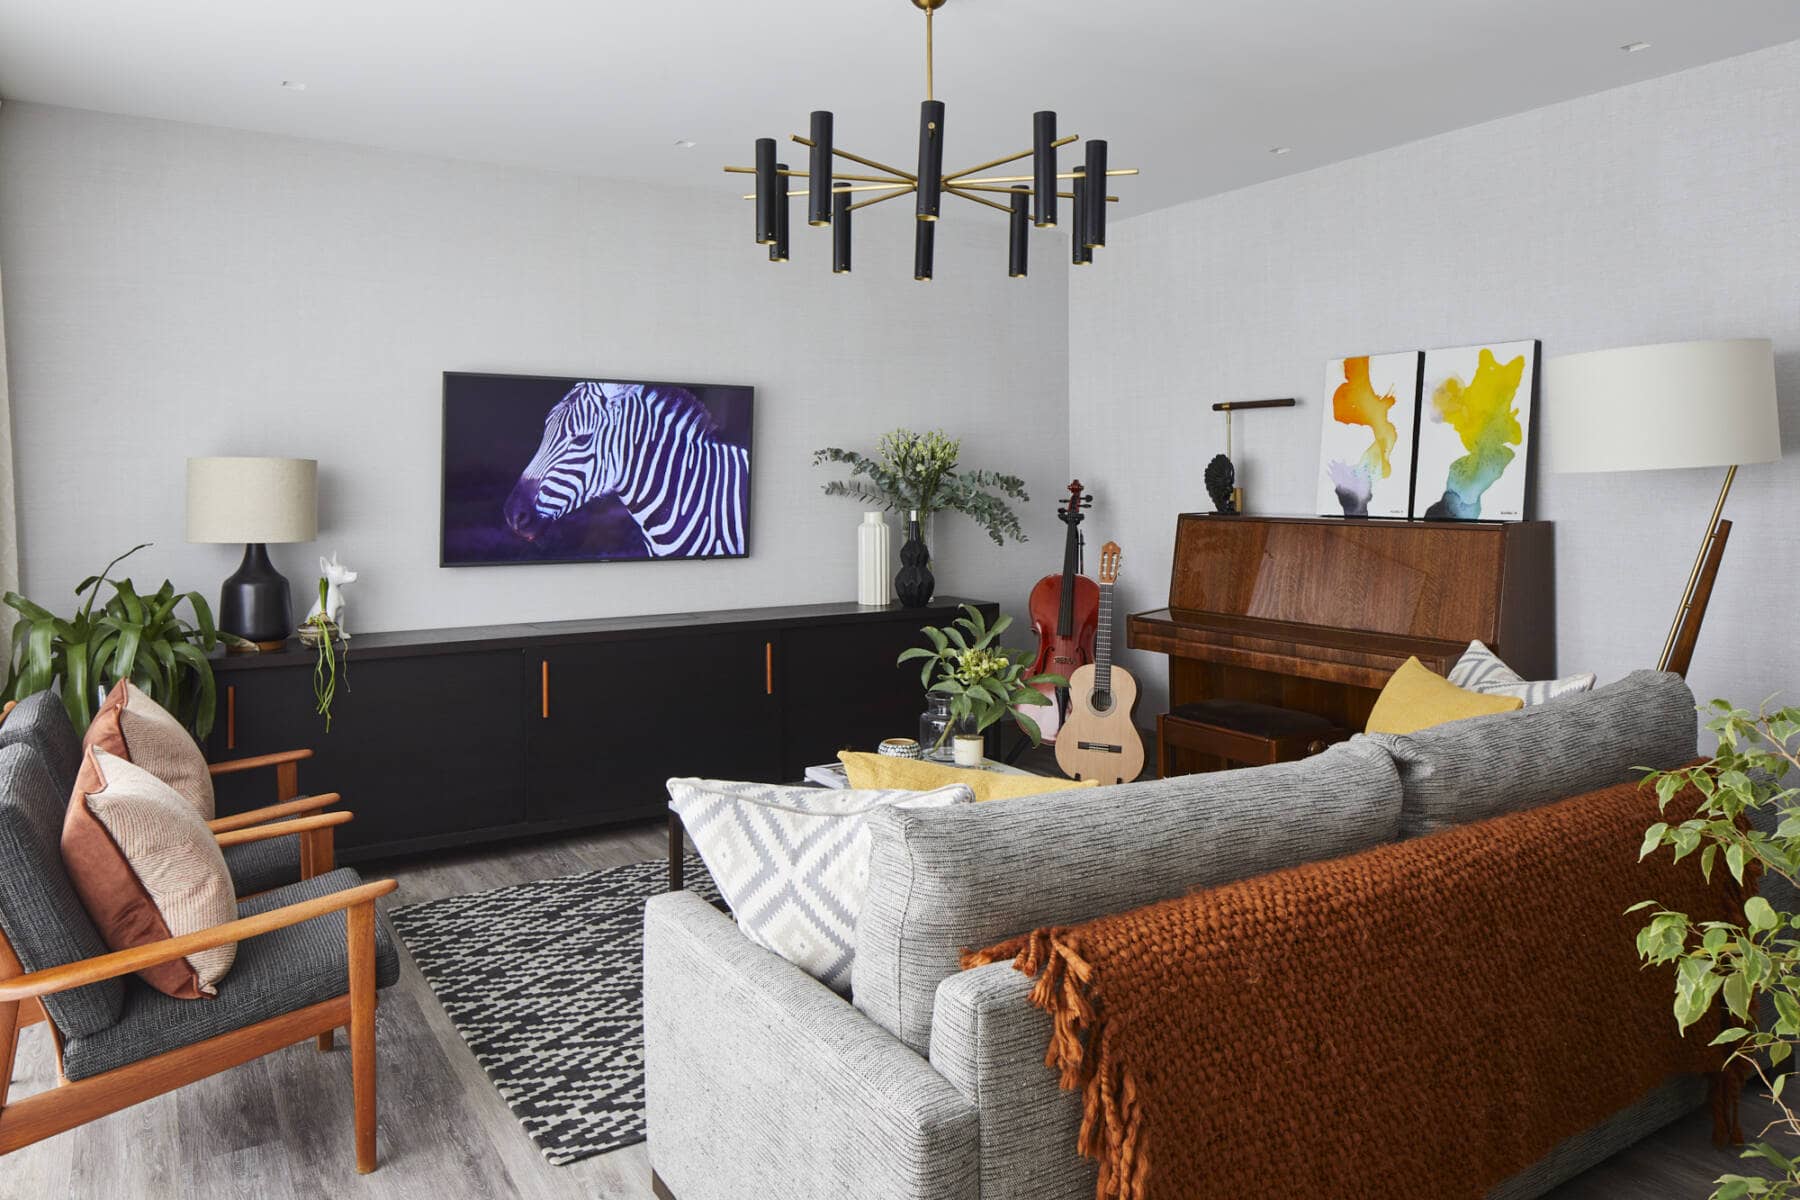 Bhavin Taylor living room design